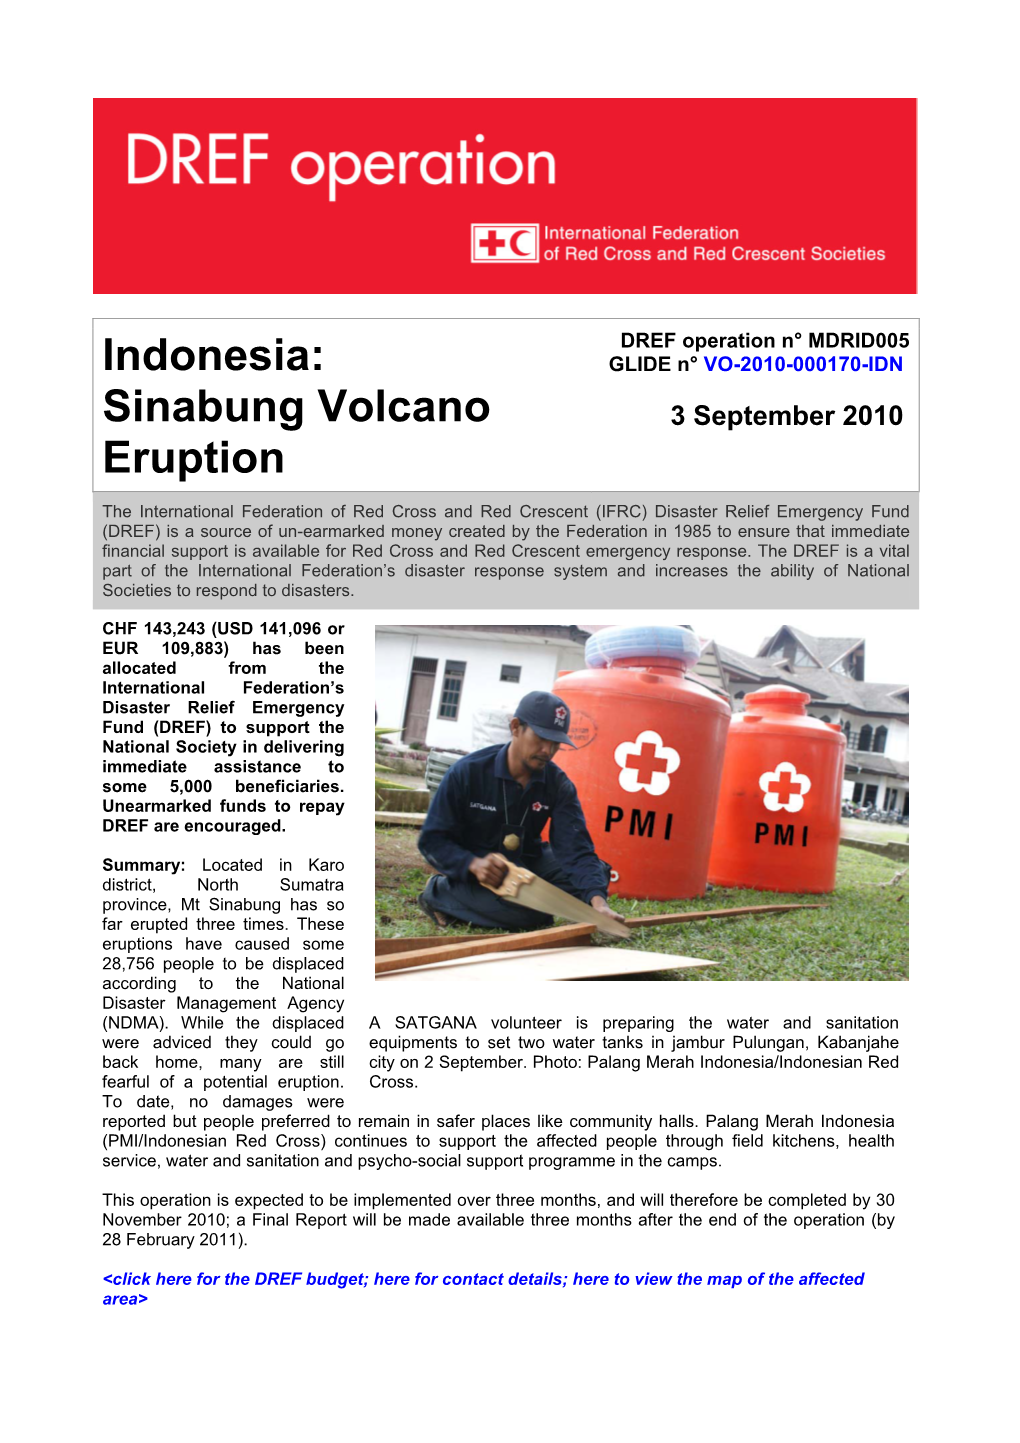 Indonesia: Sinabung Volcano Eruption